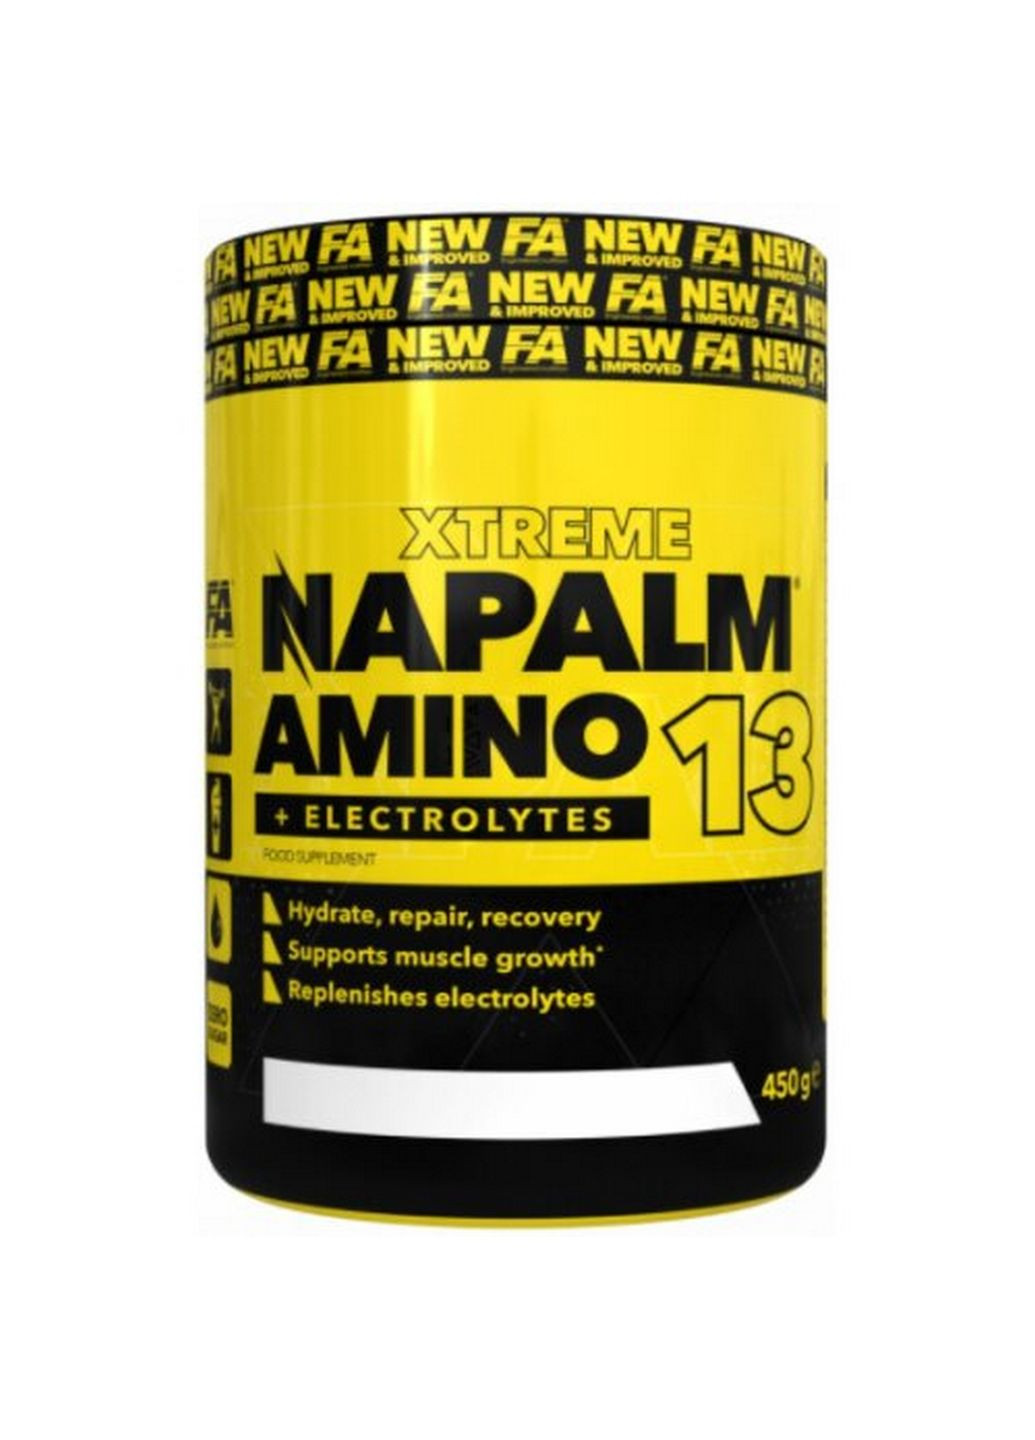 Аминокислота Napalm Amino13, 450 грамм Фруктовый Fitness Authority (293341215)